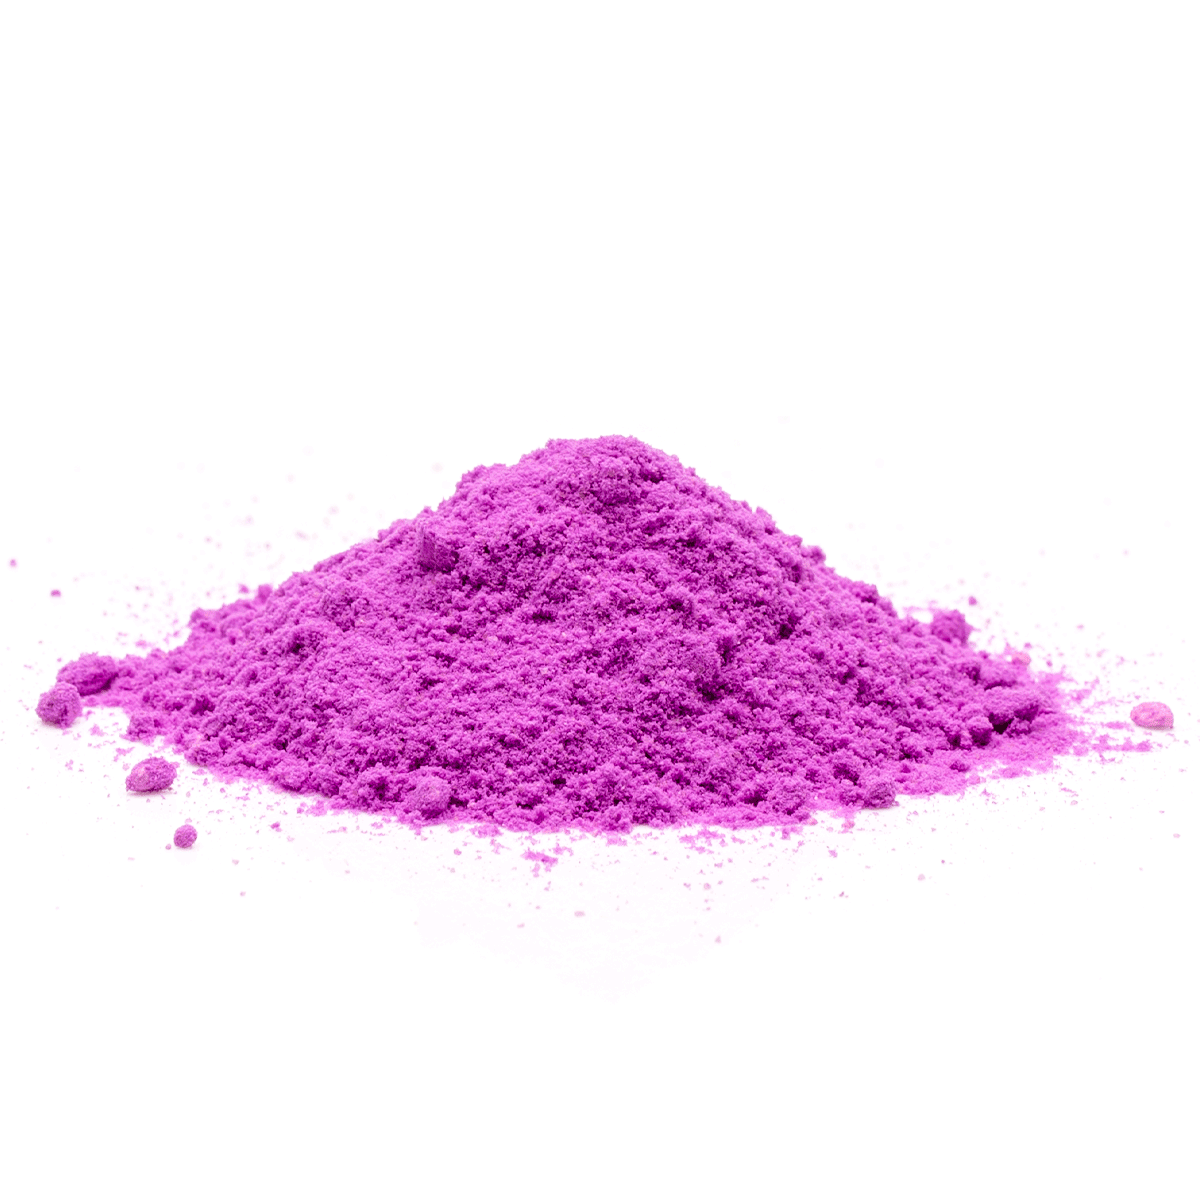 Fluoro Purple Pop Up Mix Zoomed